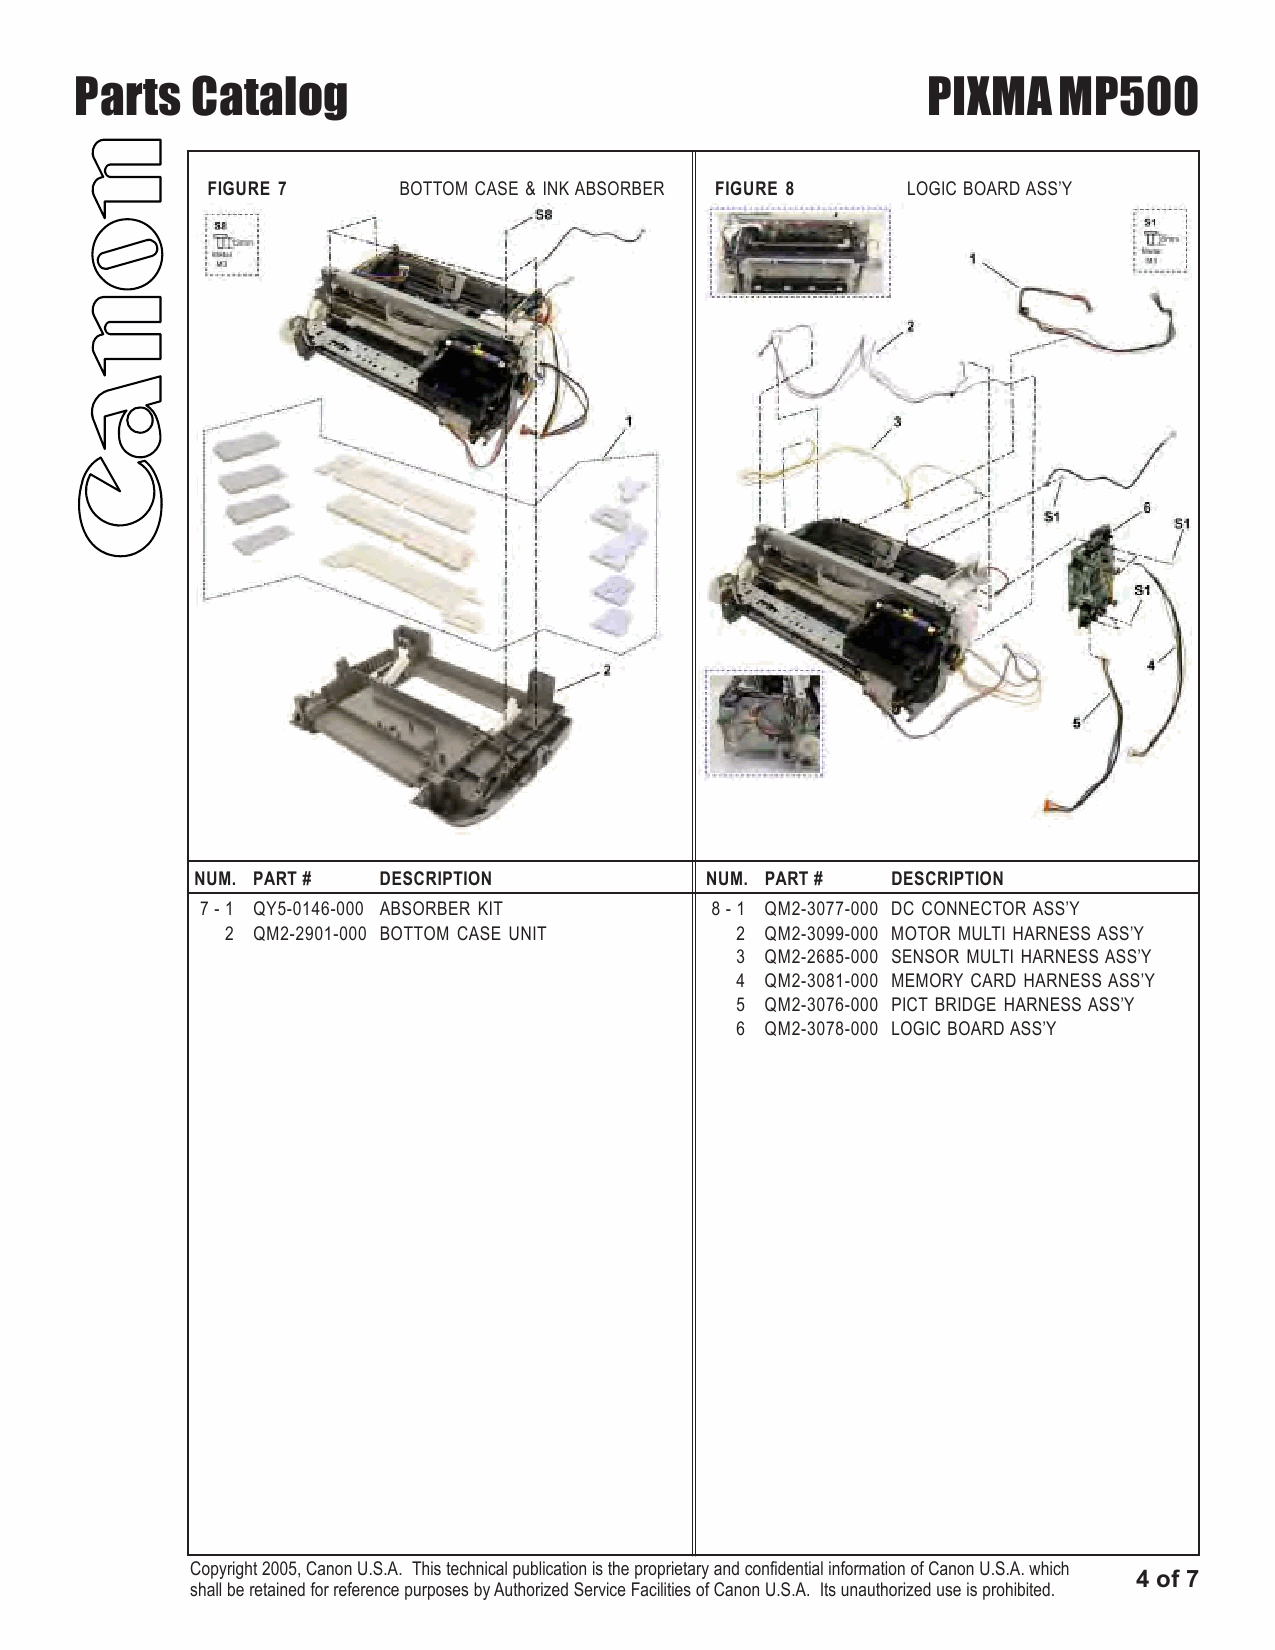 [DIAGRAM] Canon Pixma Mg8120 Service Manual And Repair Guide Parts List